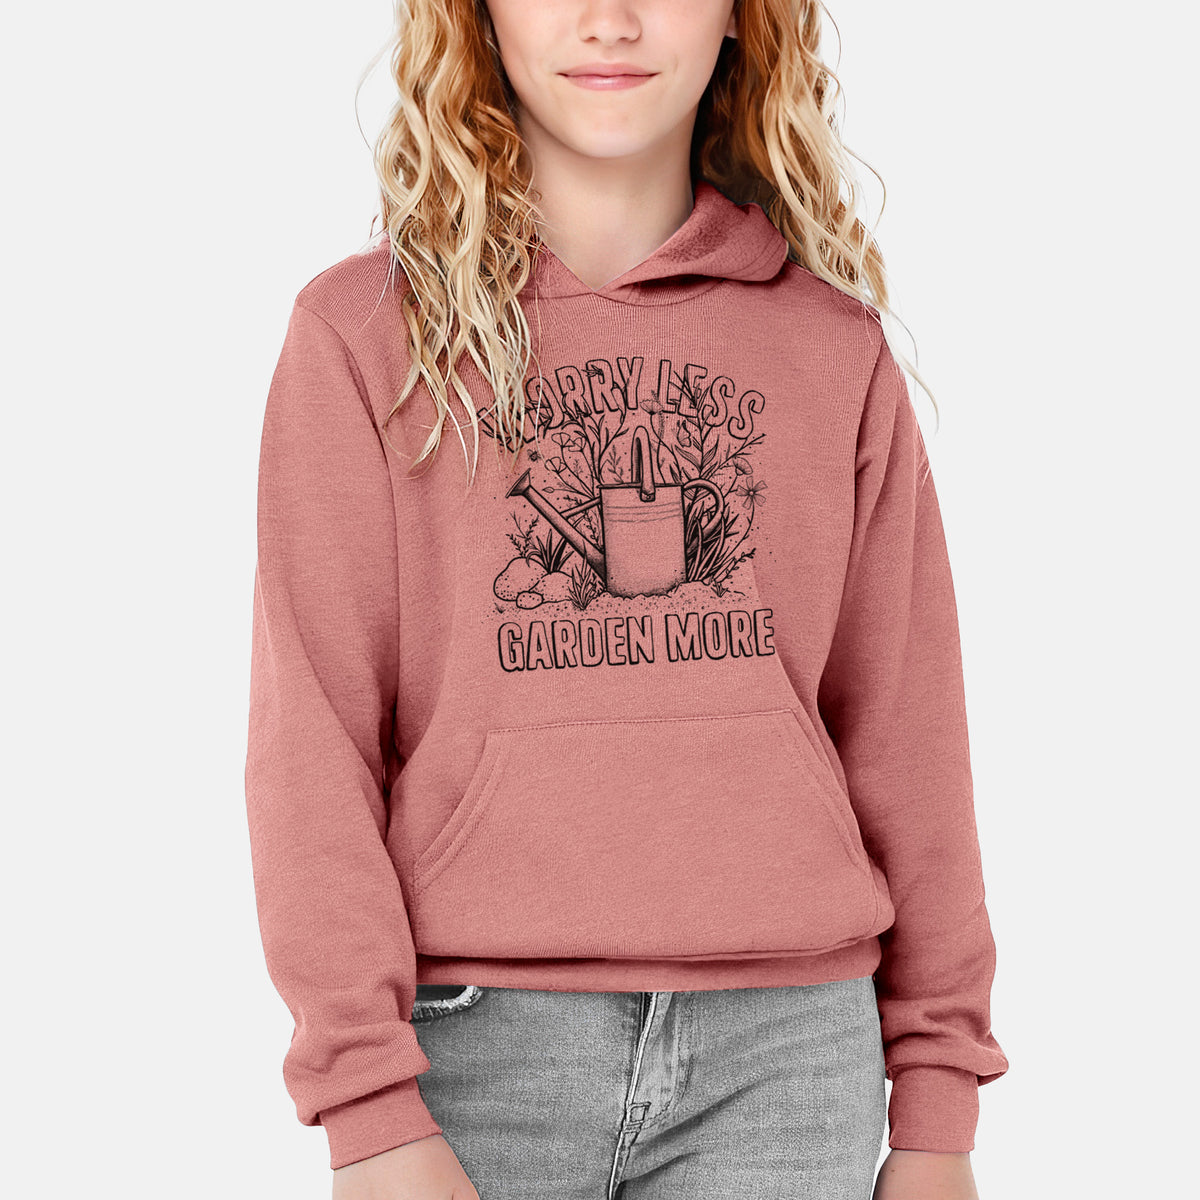 Worry Less — Garden More - Youth Hoodie Sweatshirt